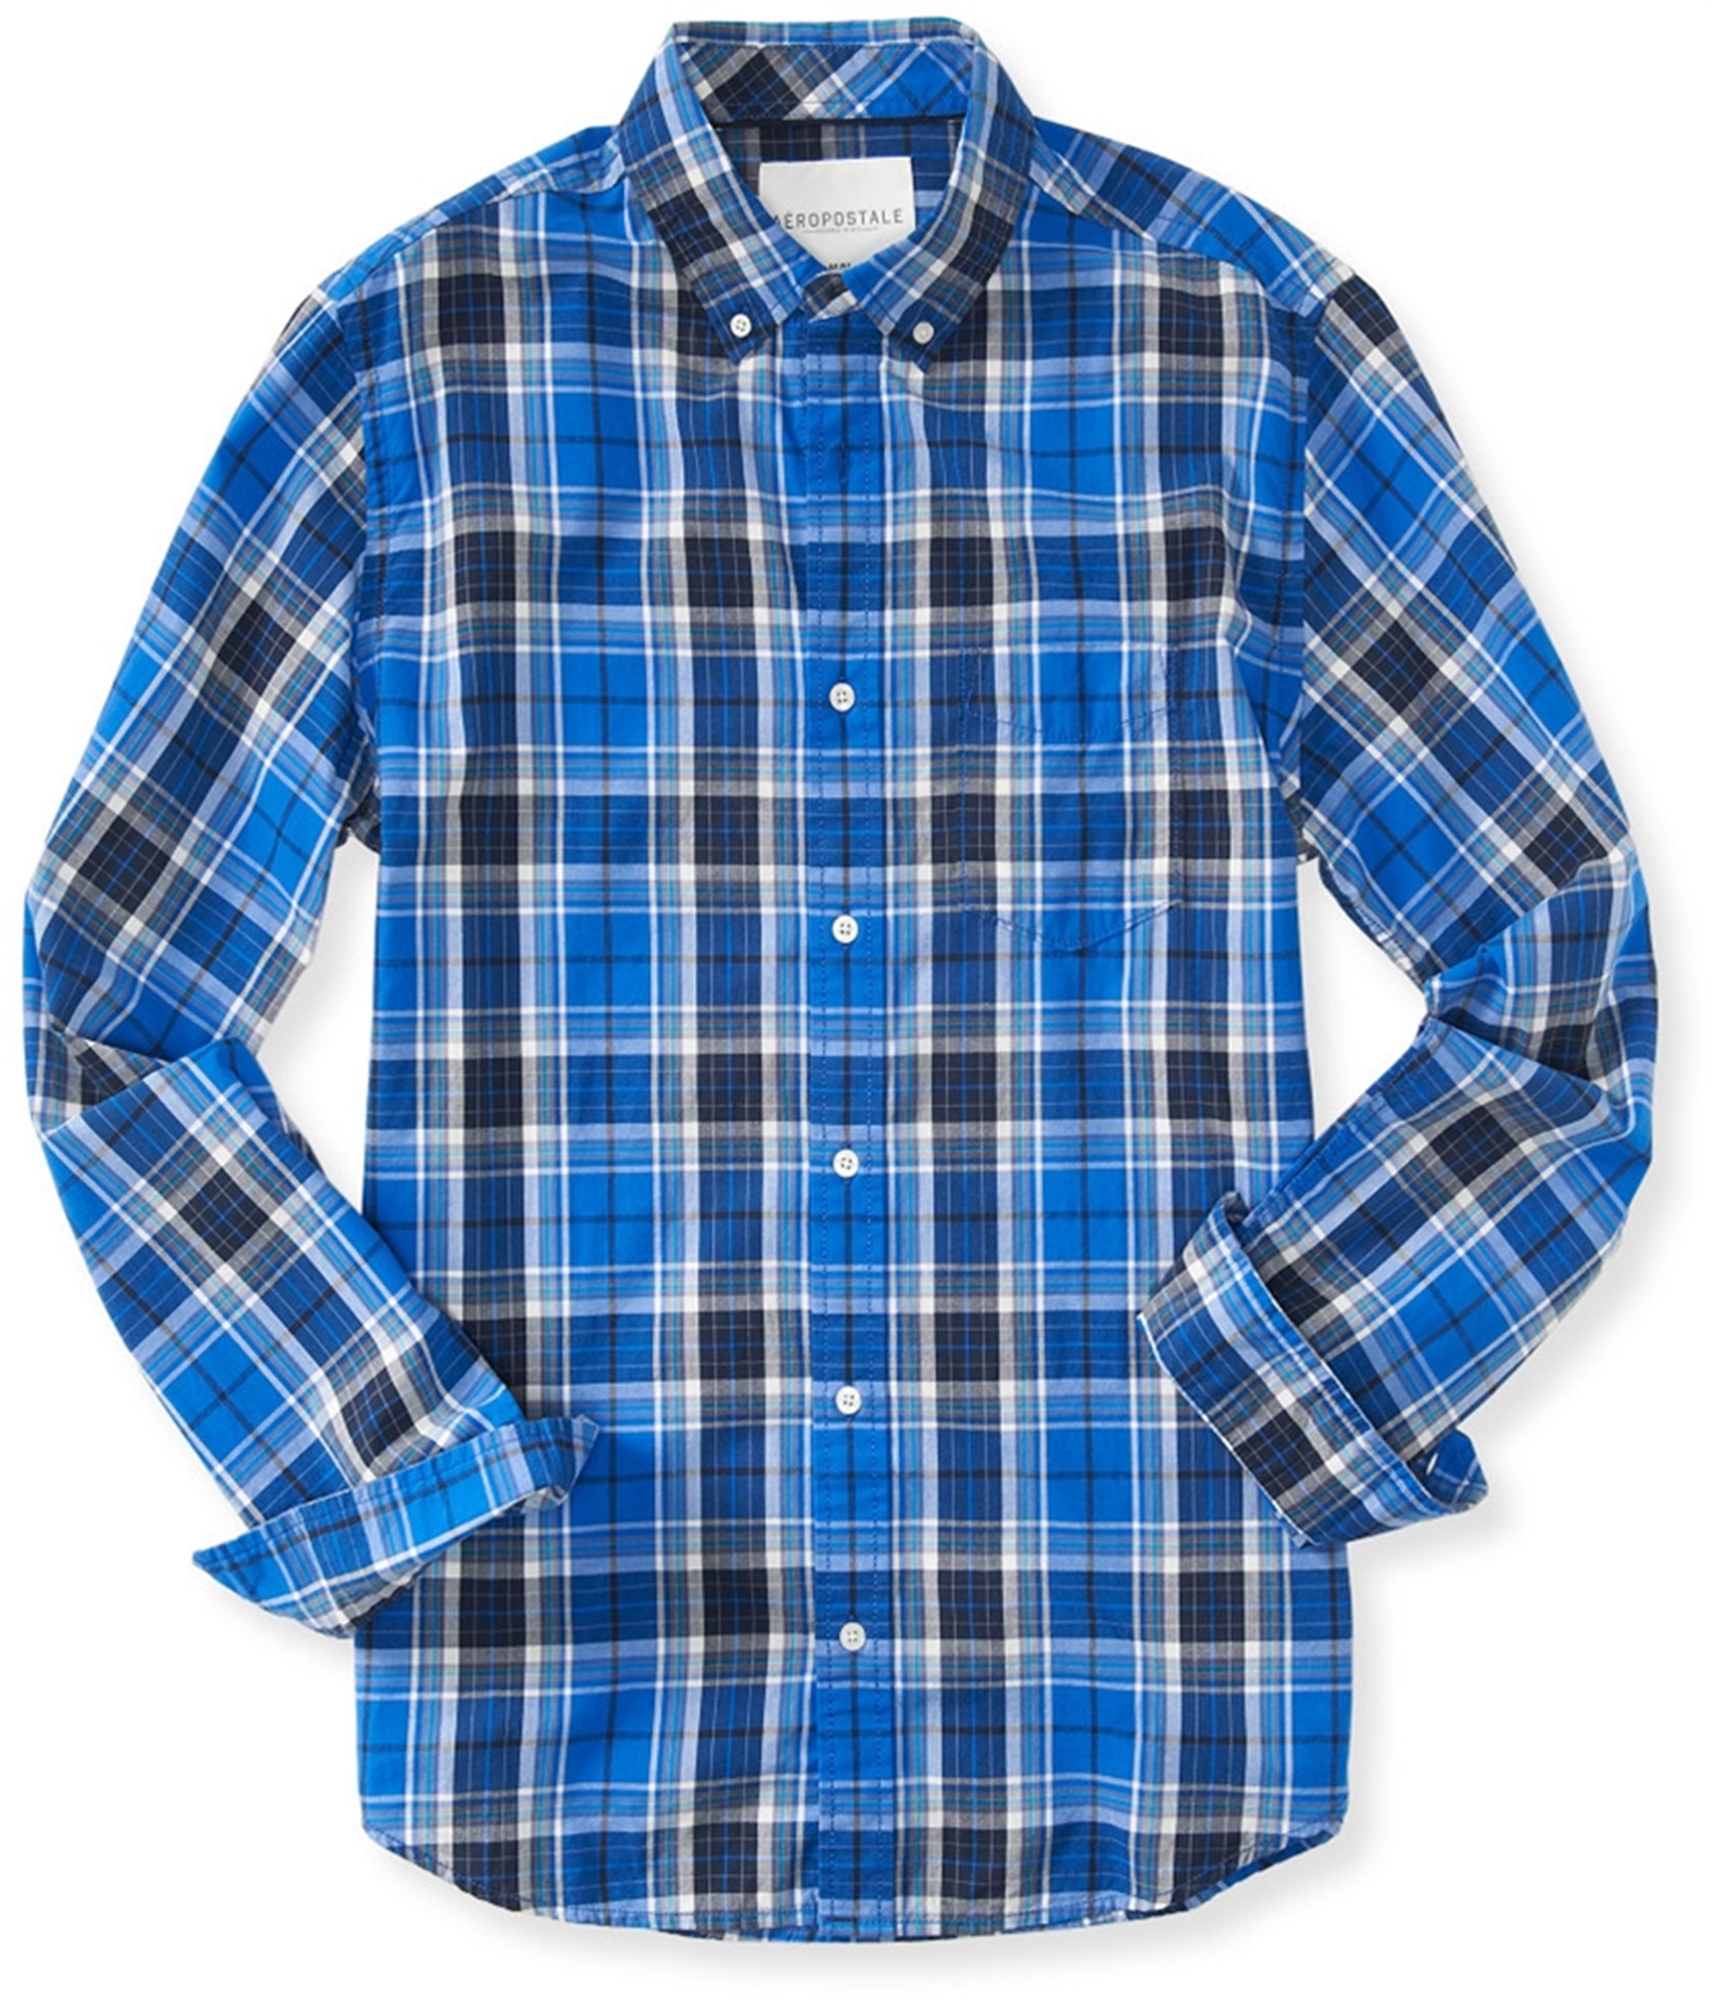 Aeropostale Mens Plaid Button Up Shirt, Blue, Small | eBay